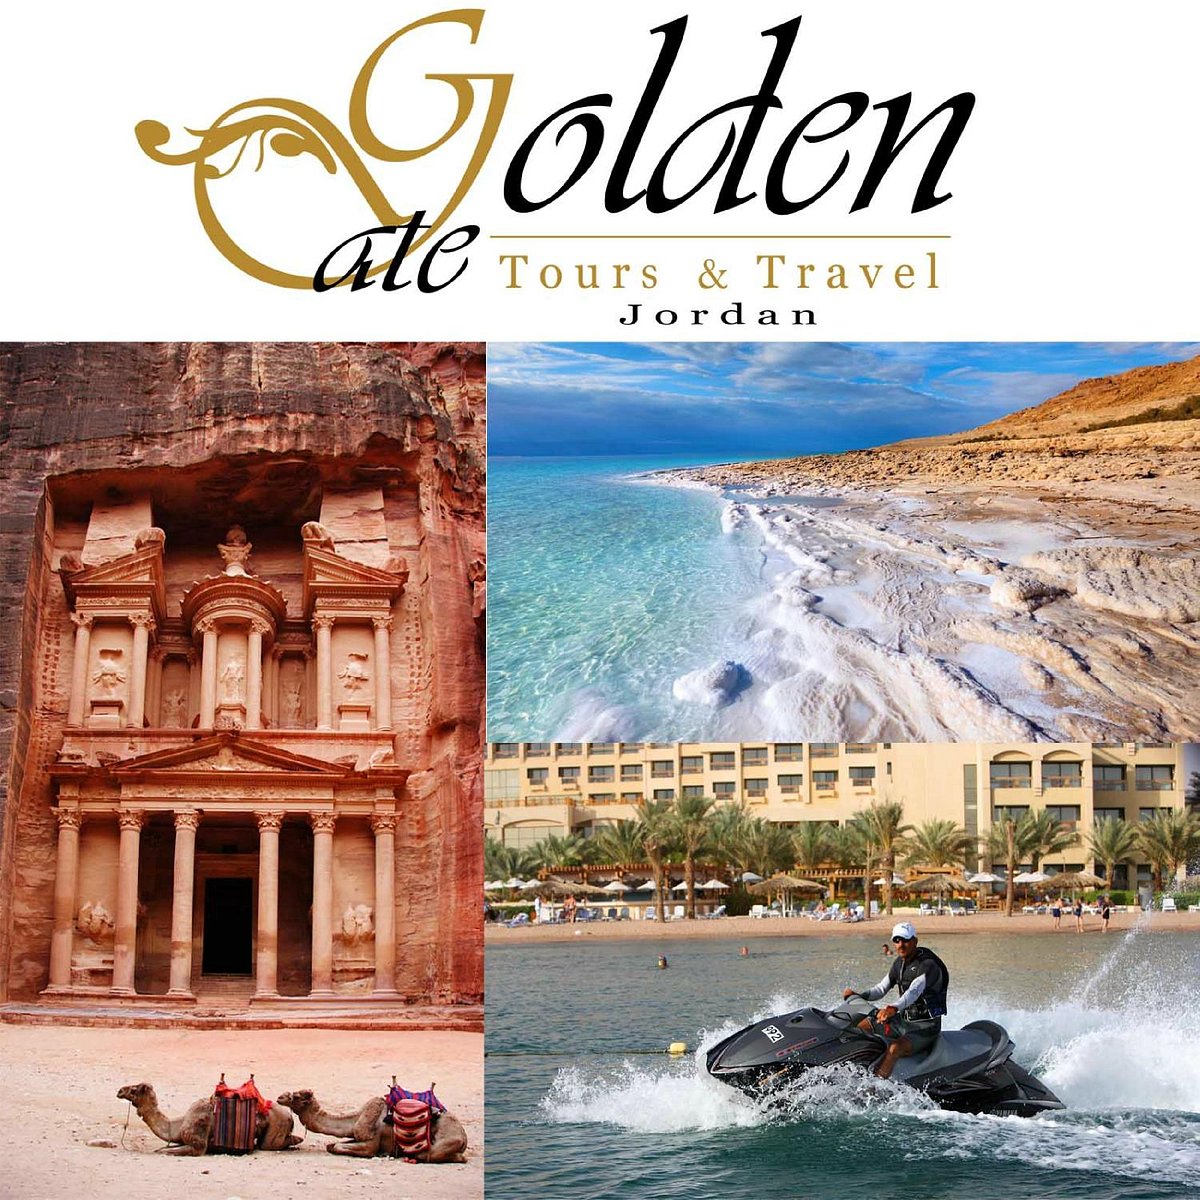 golden gate tours & travel jordan